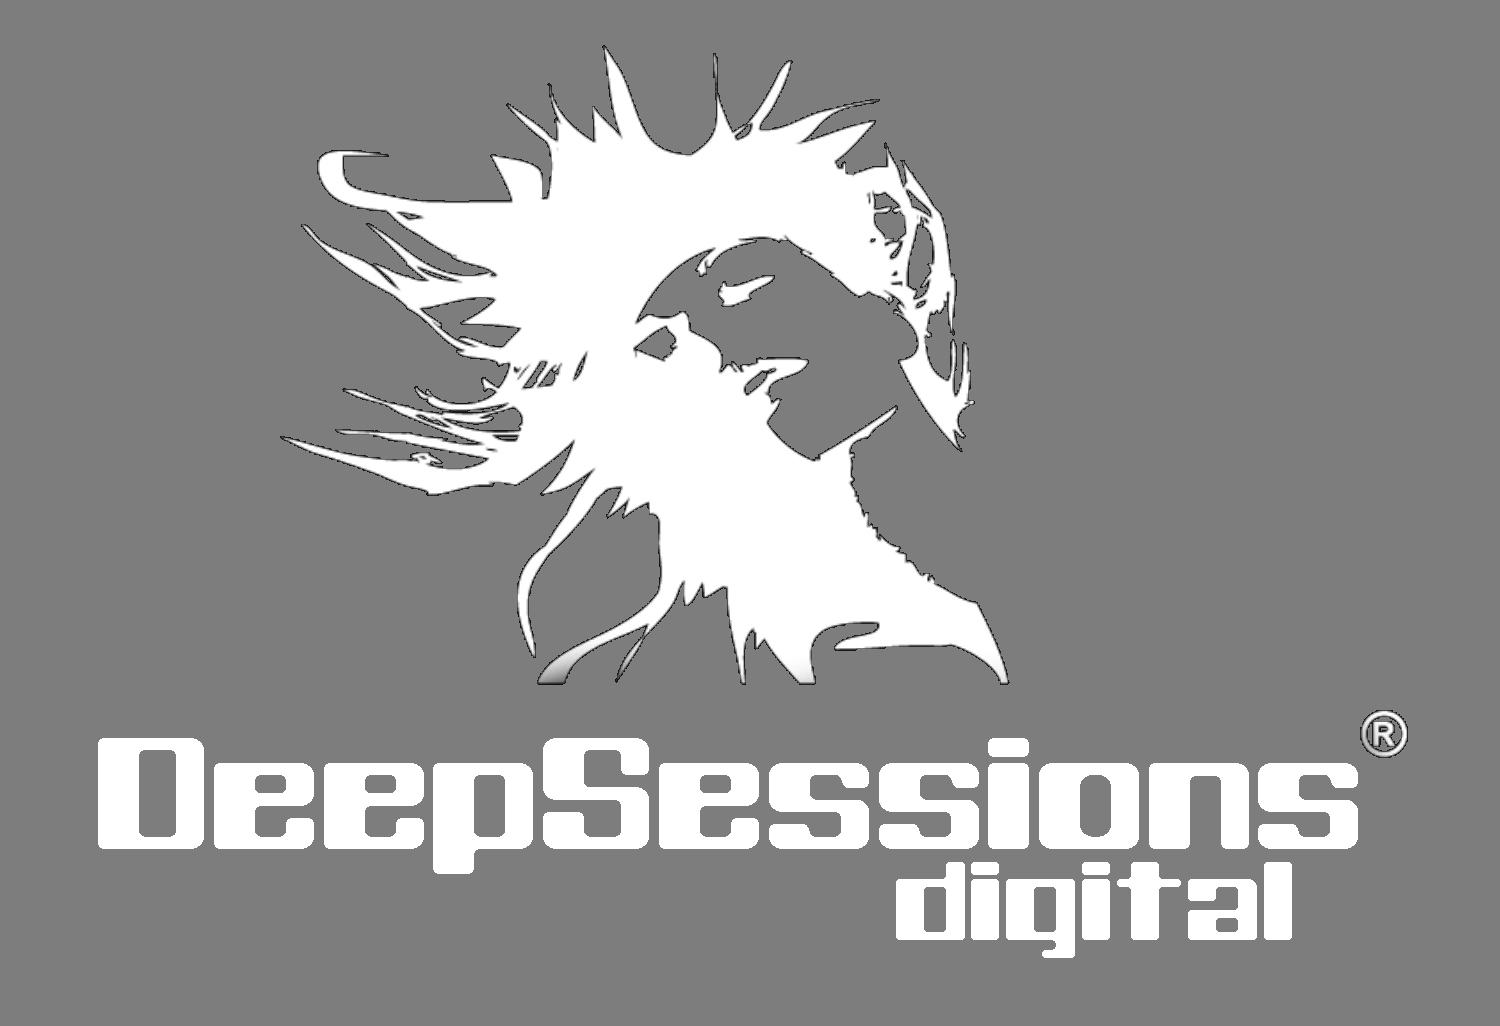 Deepsessions Digital